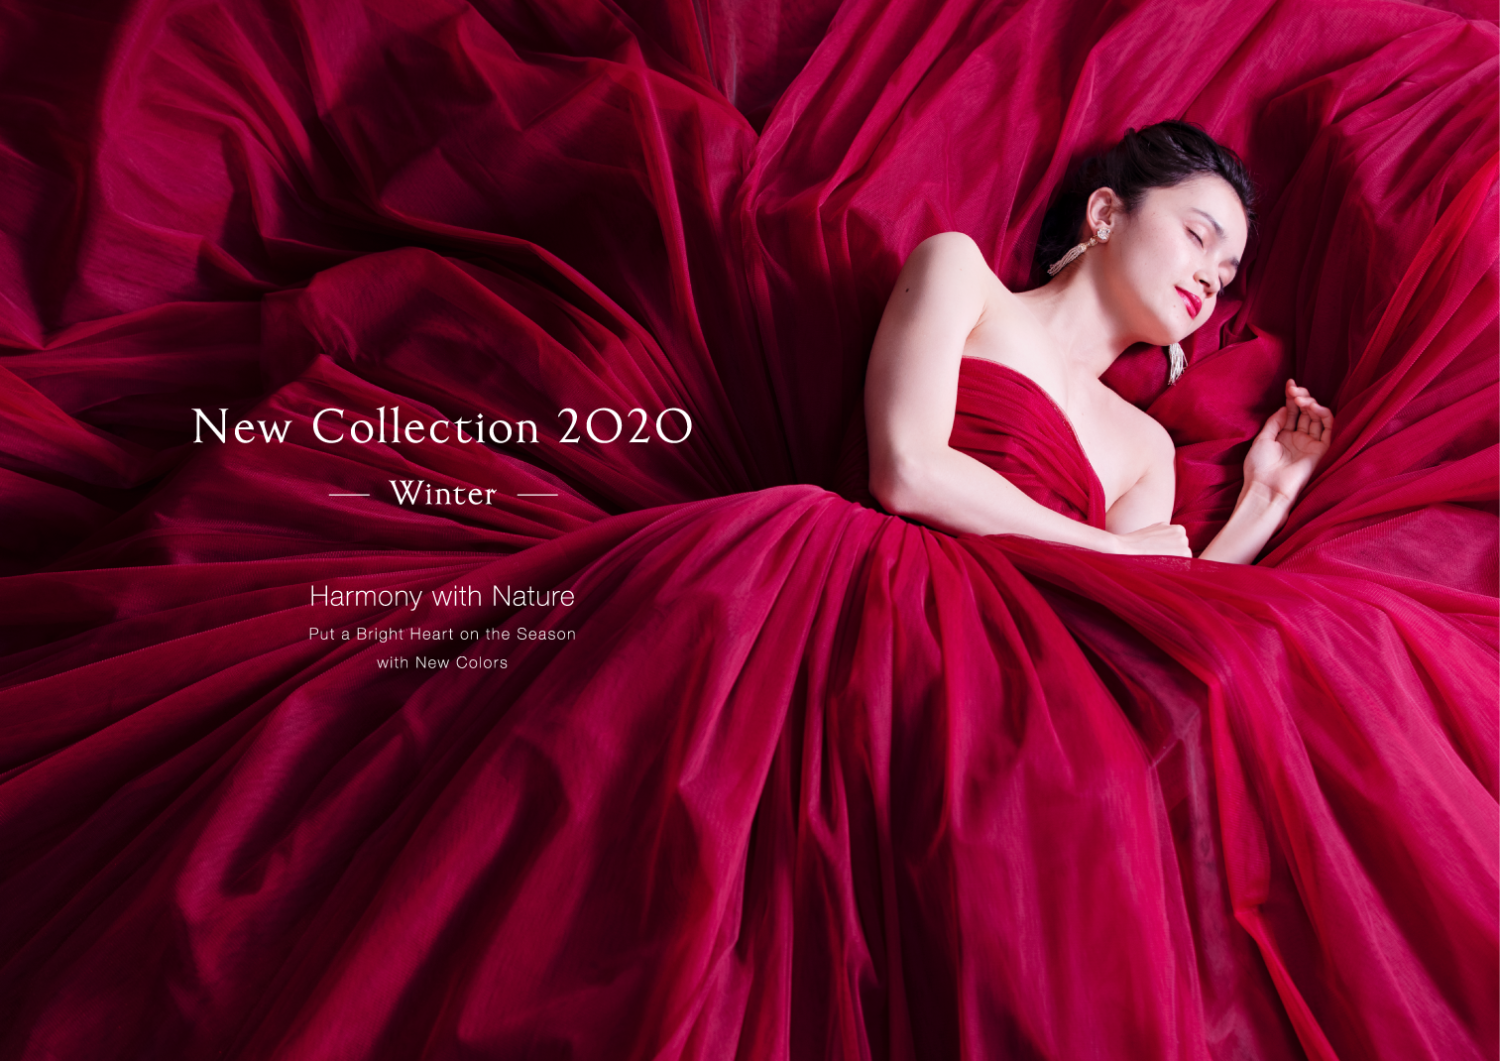 「New Collection 2020 Winter」リリースしました。